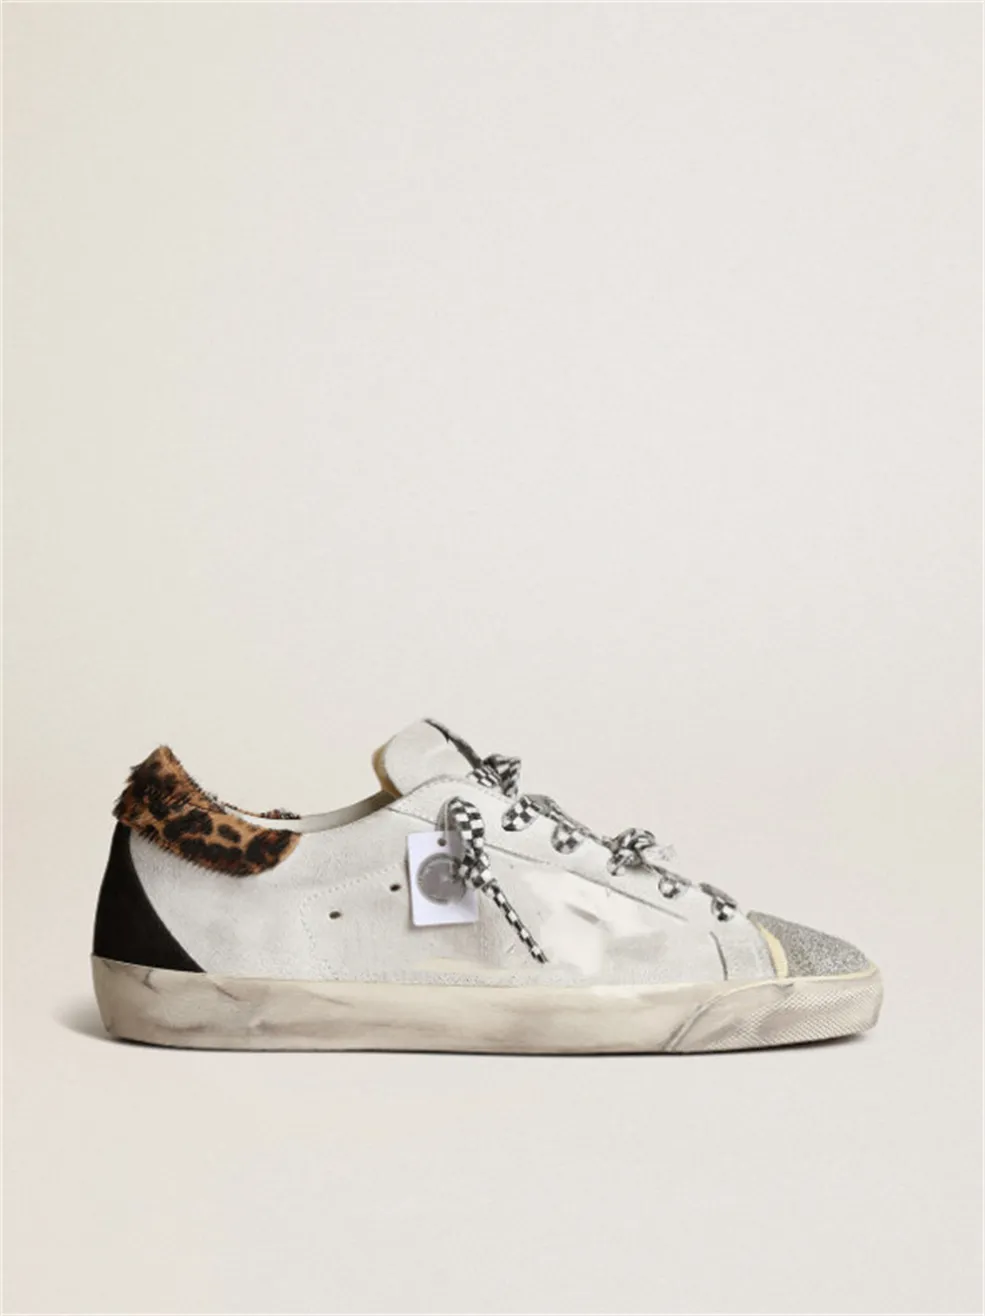 Sole Small Dirty Shoes Designer Lyxig italiensk vintage handgjorda sneakers trimmade med vitt läder